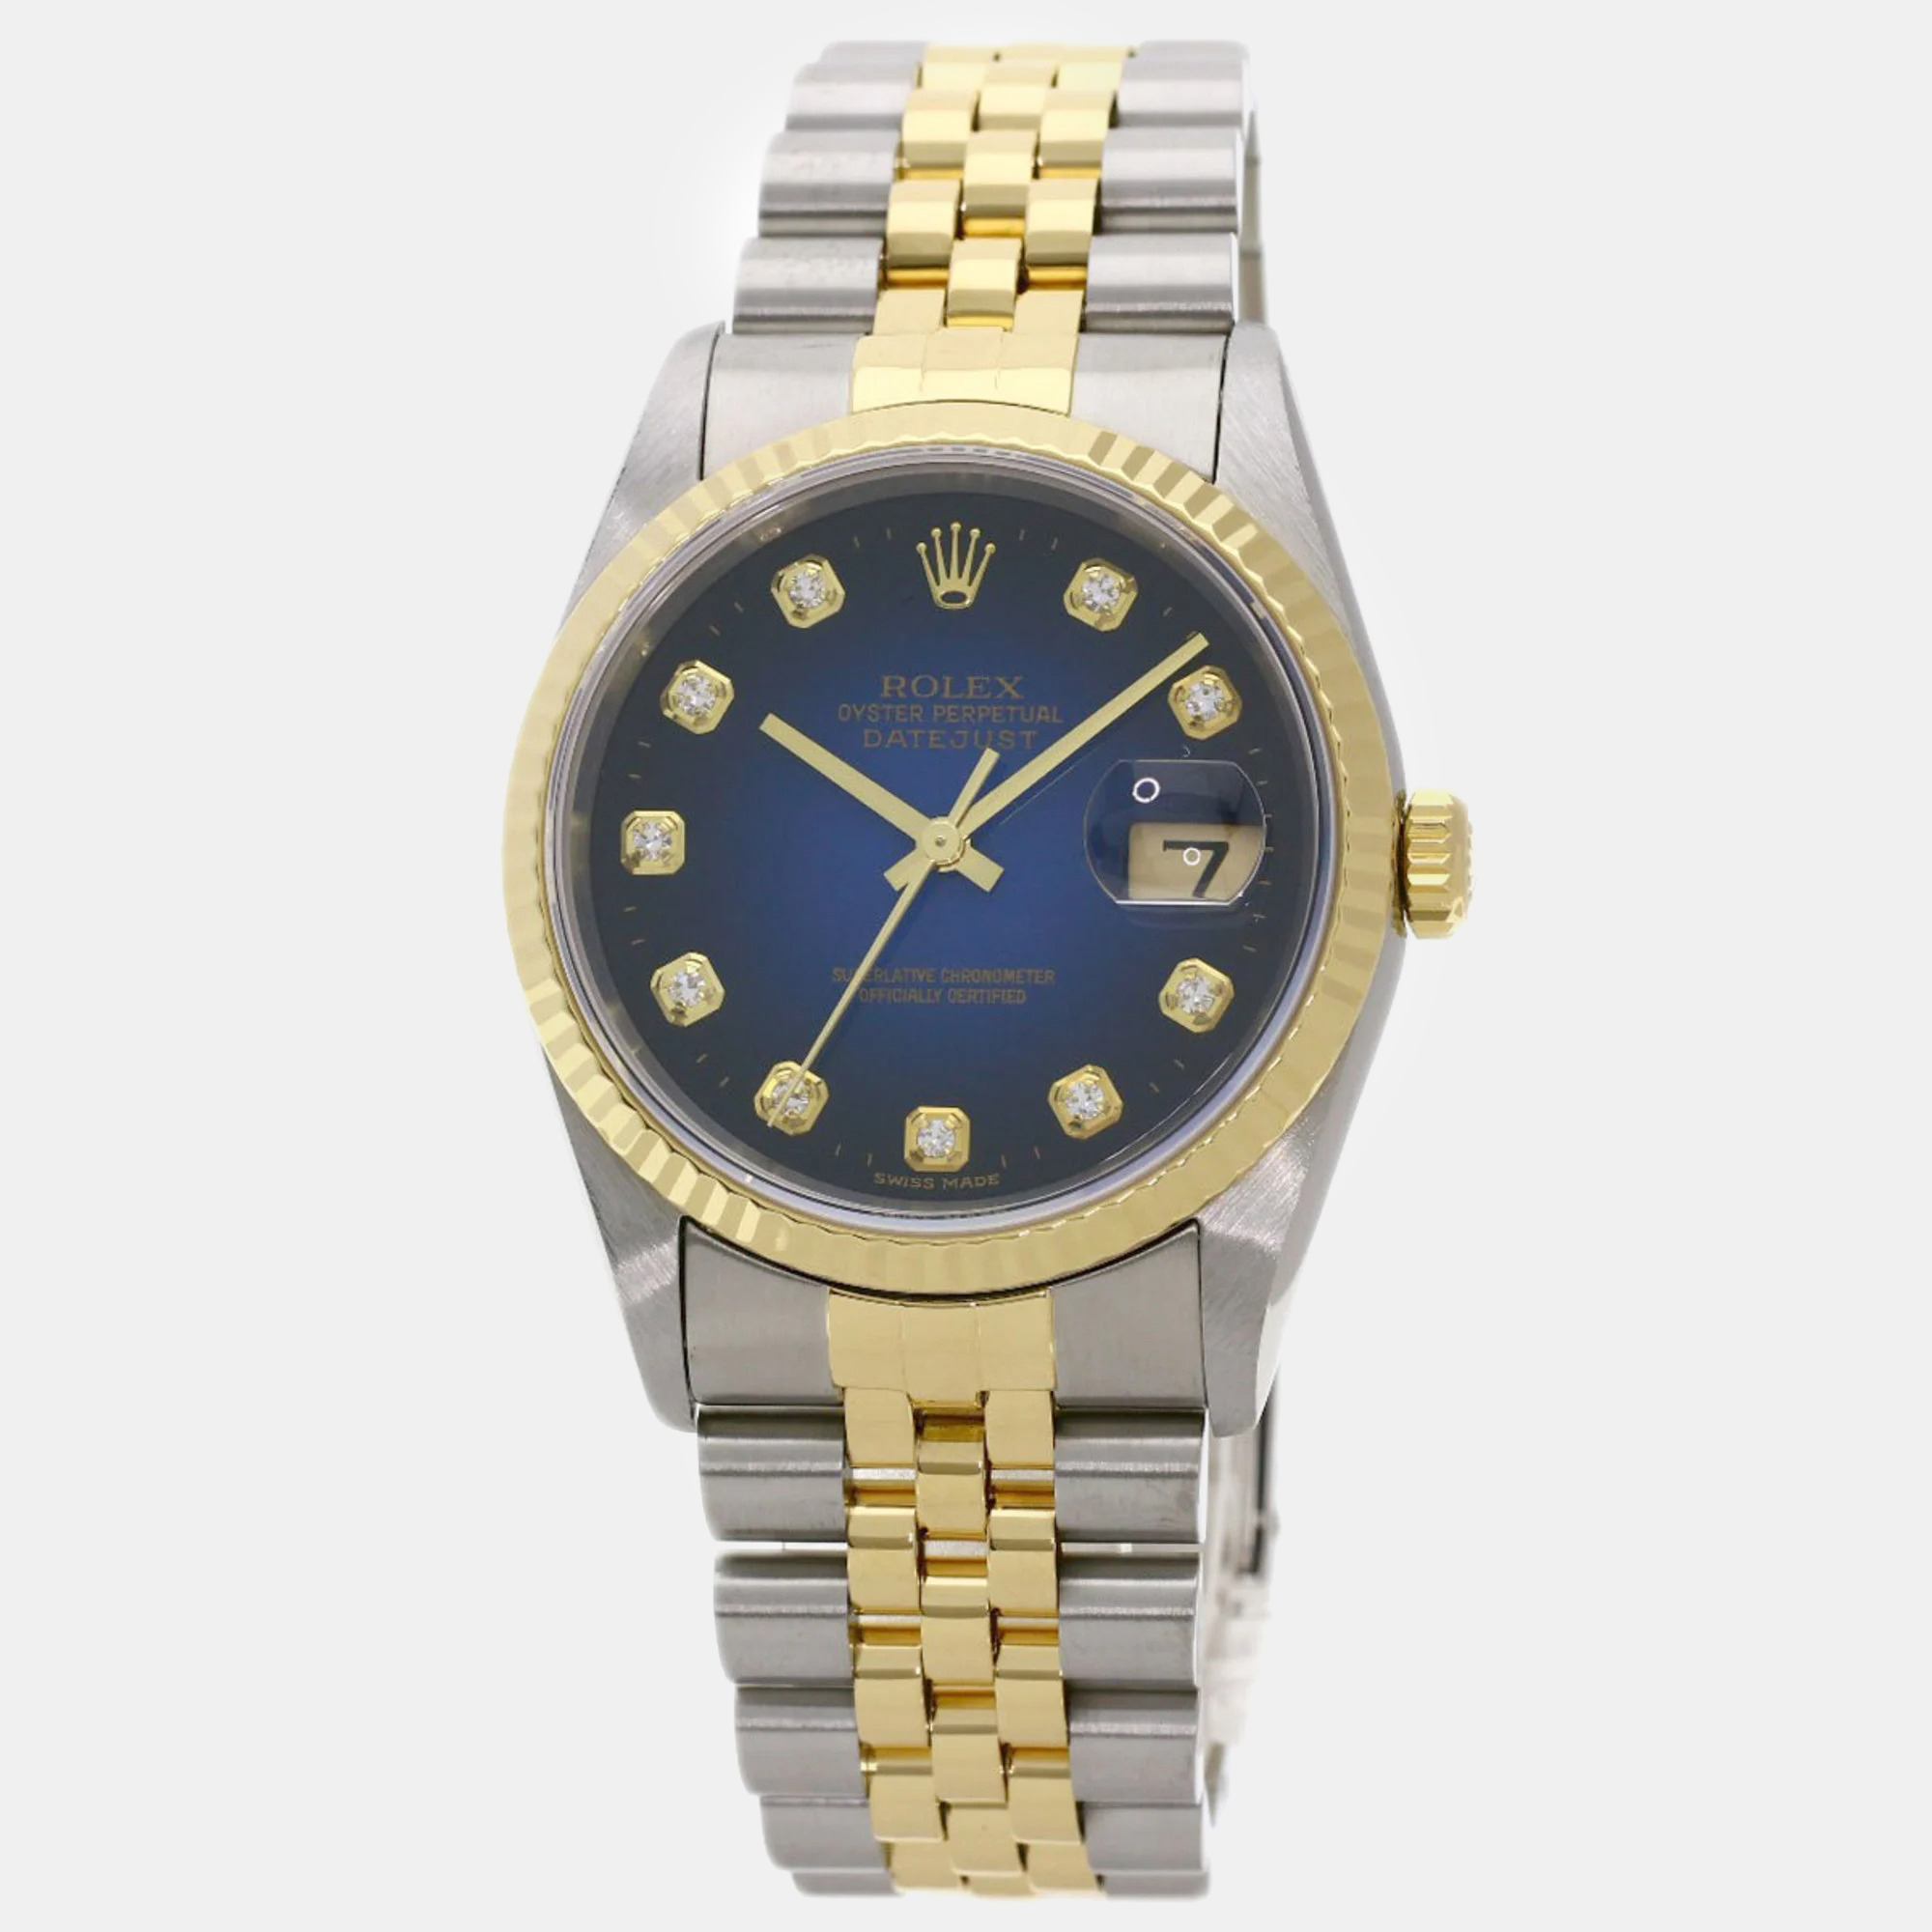 Rolex blue diamond 18k yellow gold stainless steel datejust 16233 automatic men's wristwatch 36 mm